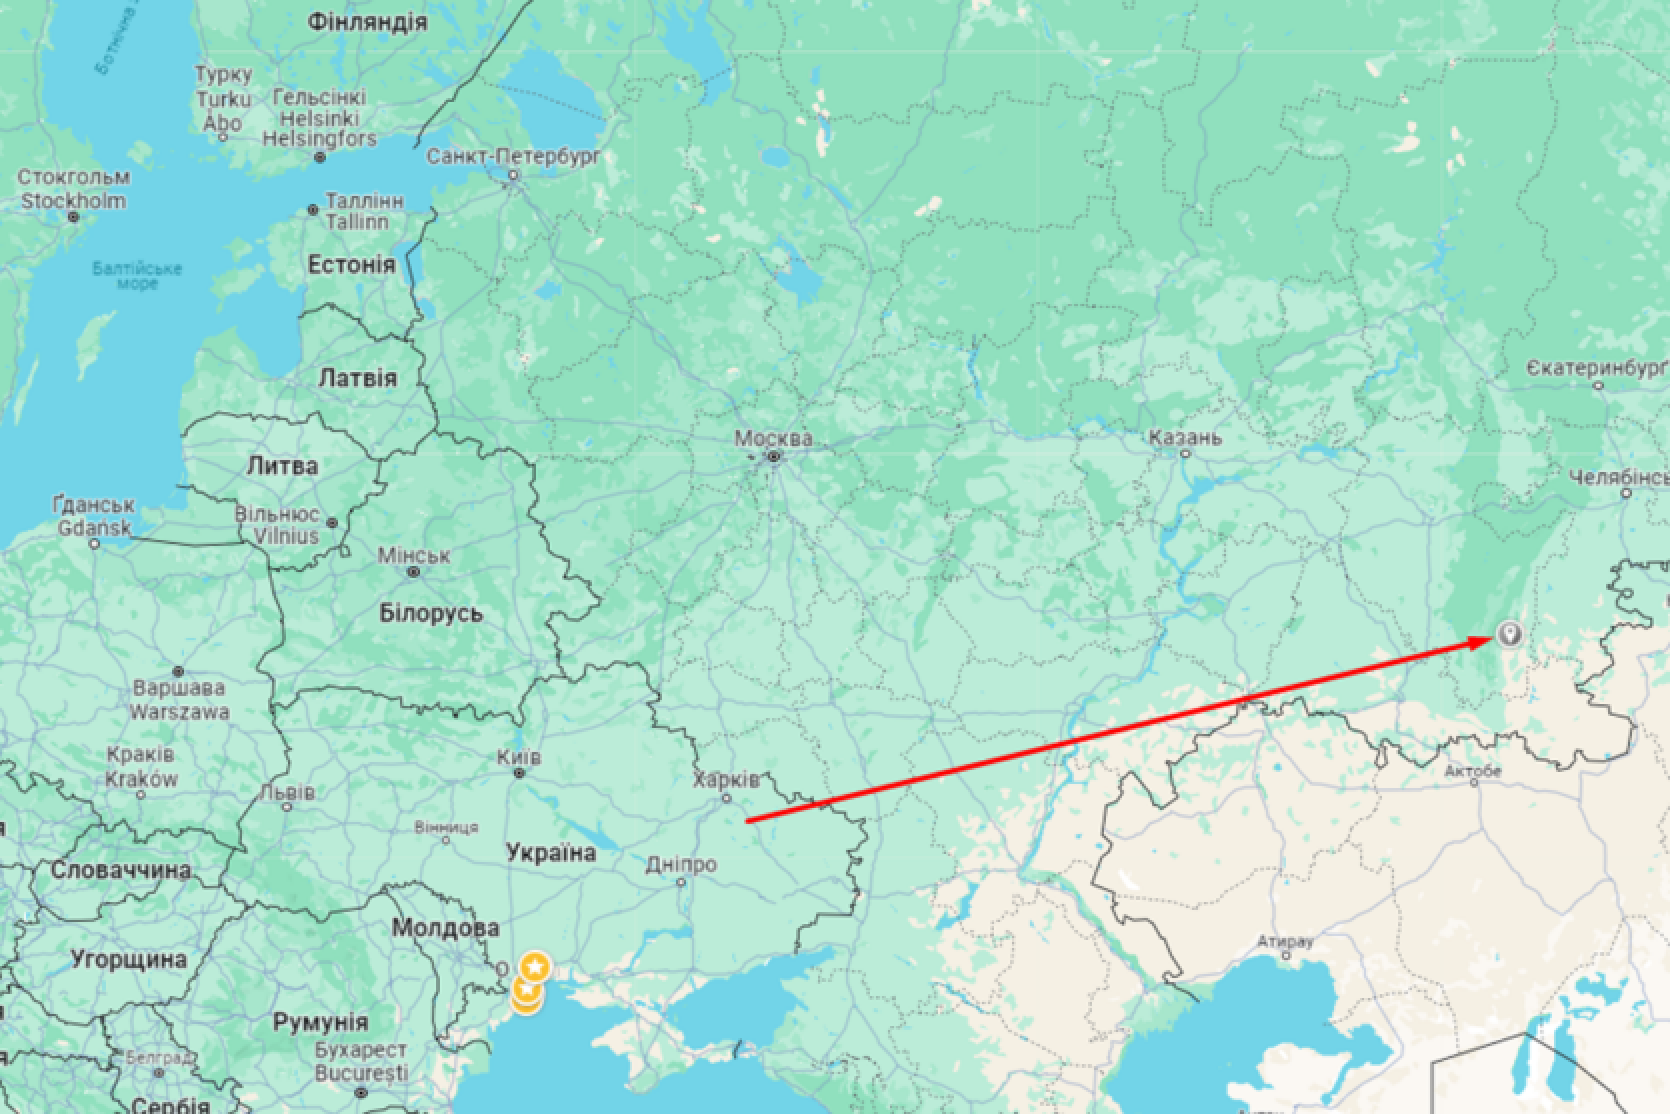 Historical record: Ukrainian drones traveled 1,500 km to a refinery in bashkortostan